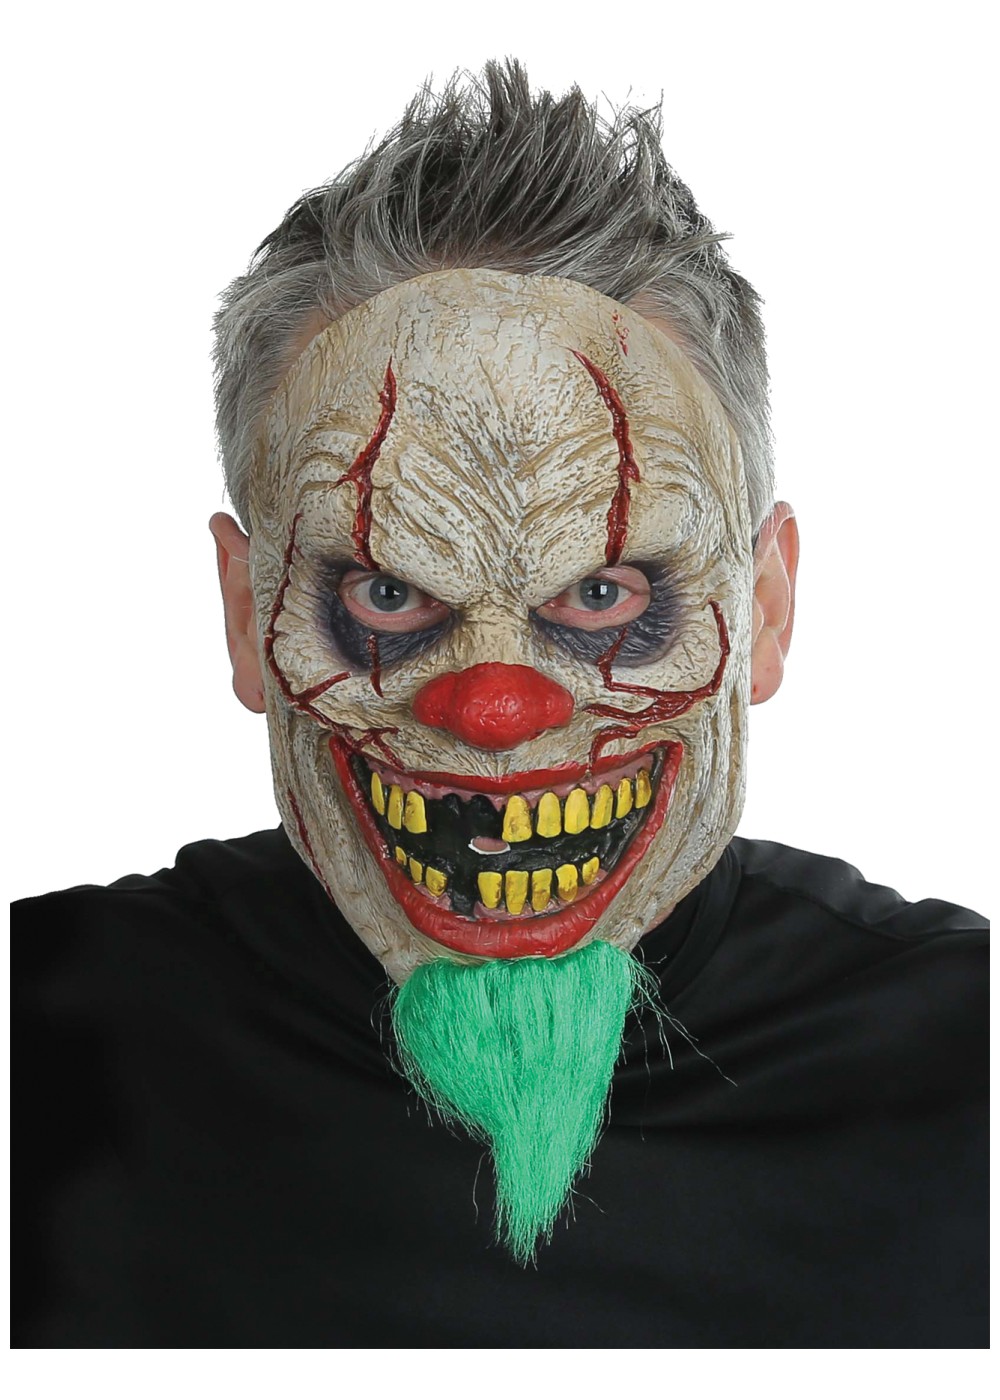 Bad News Clown Mask